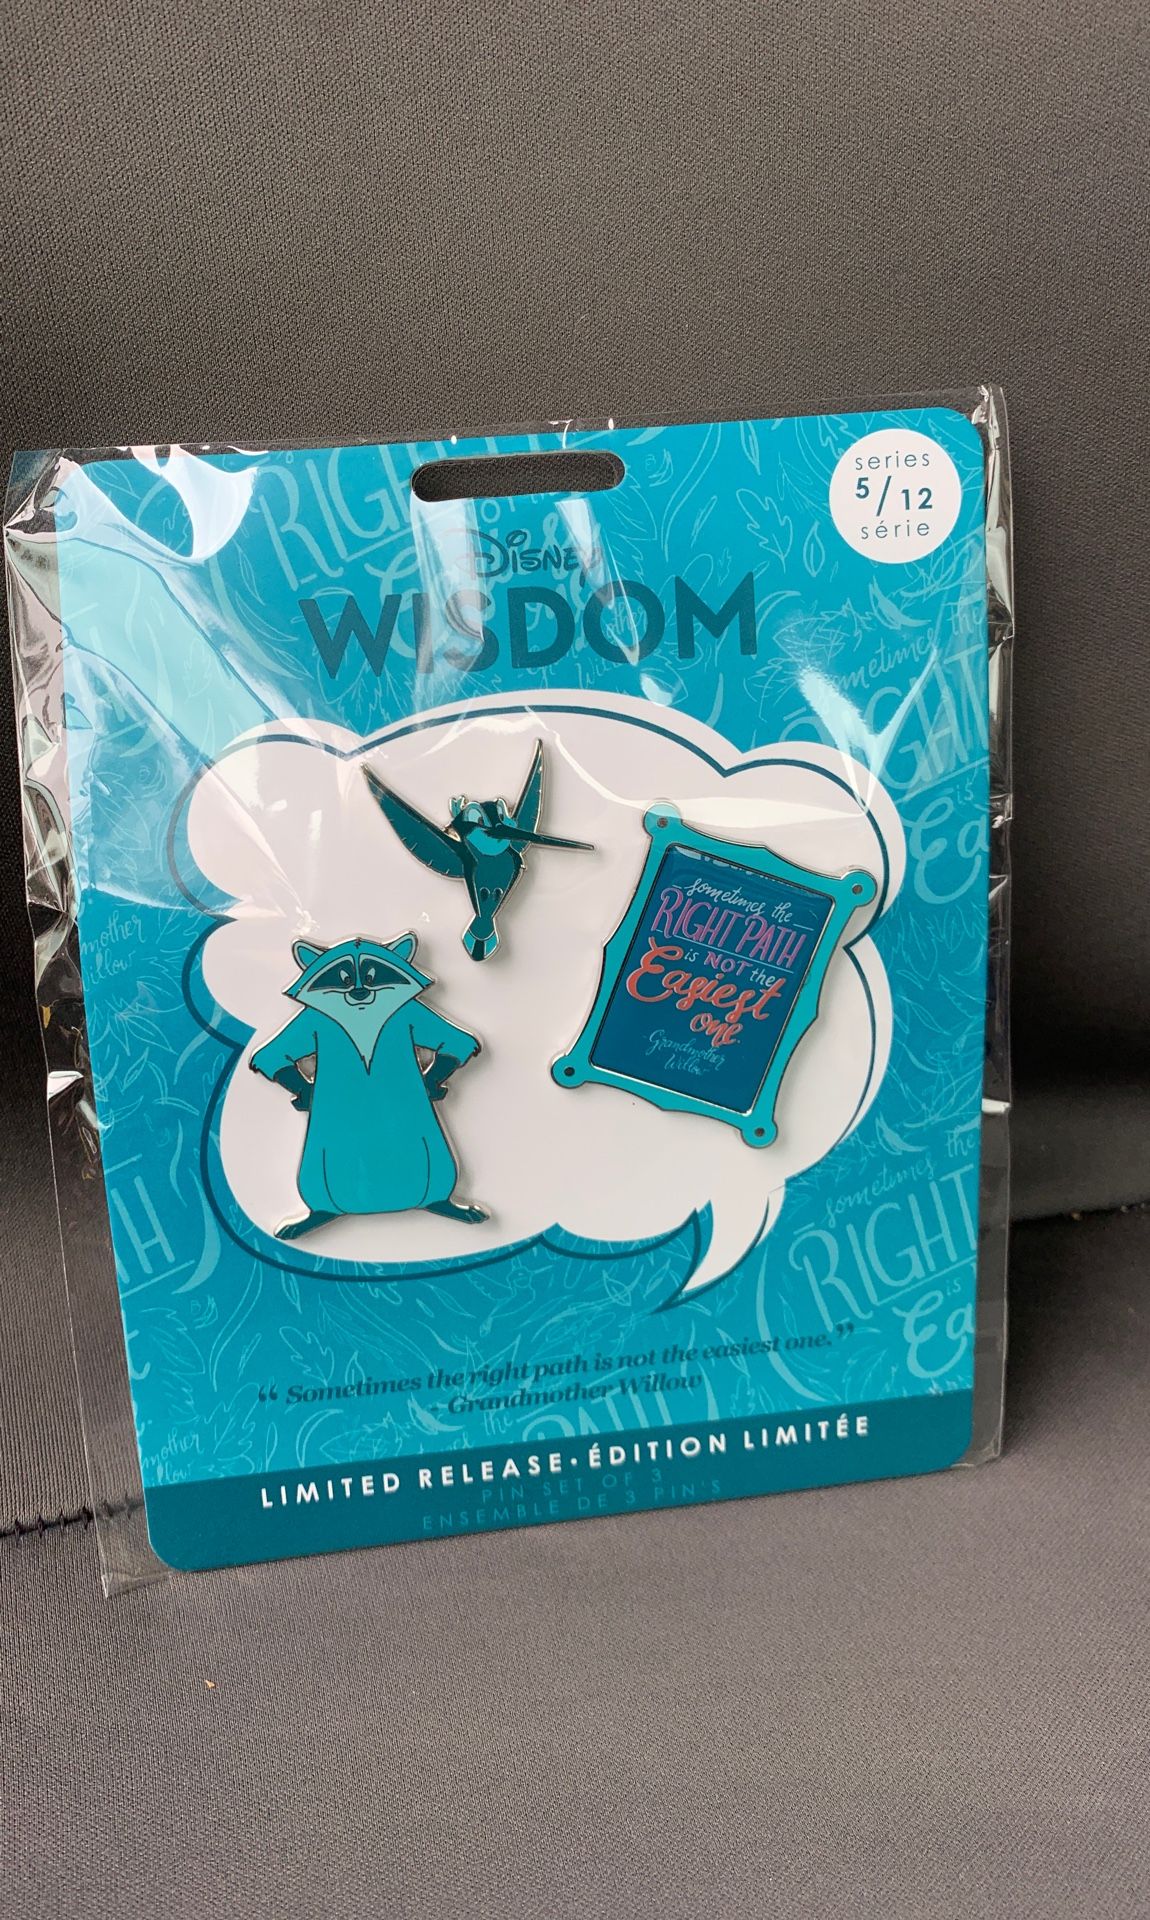 Disney wisdom pin series 5/12 limited edition